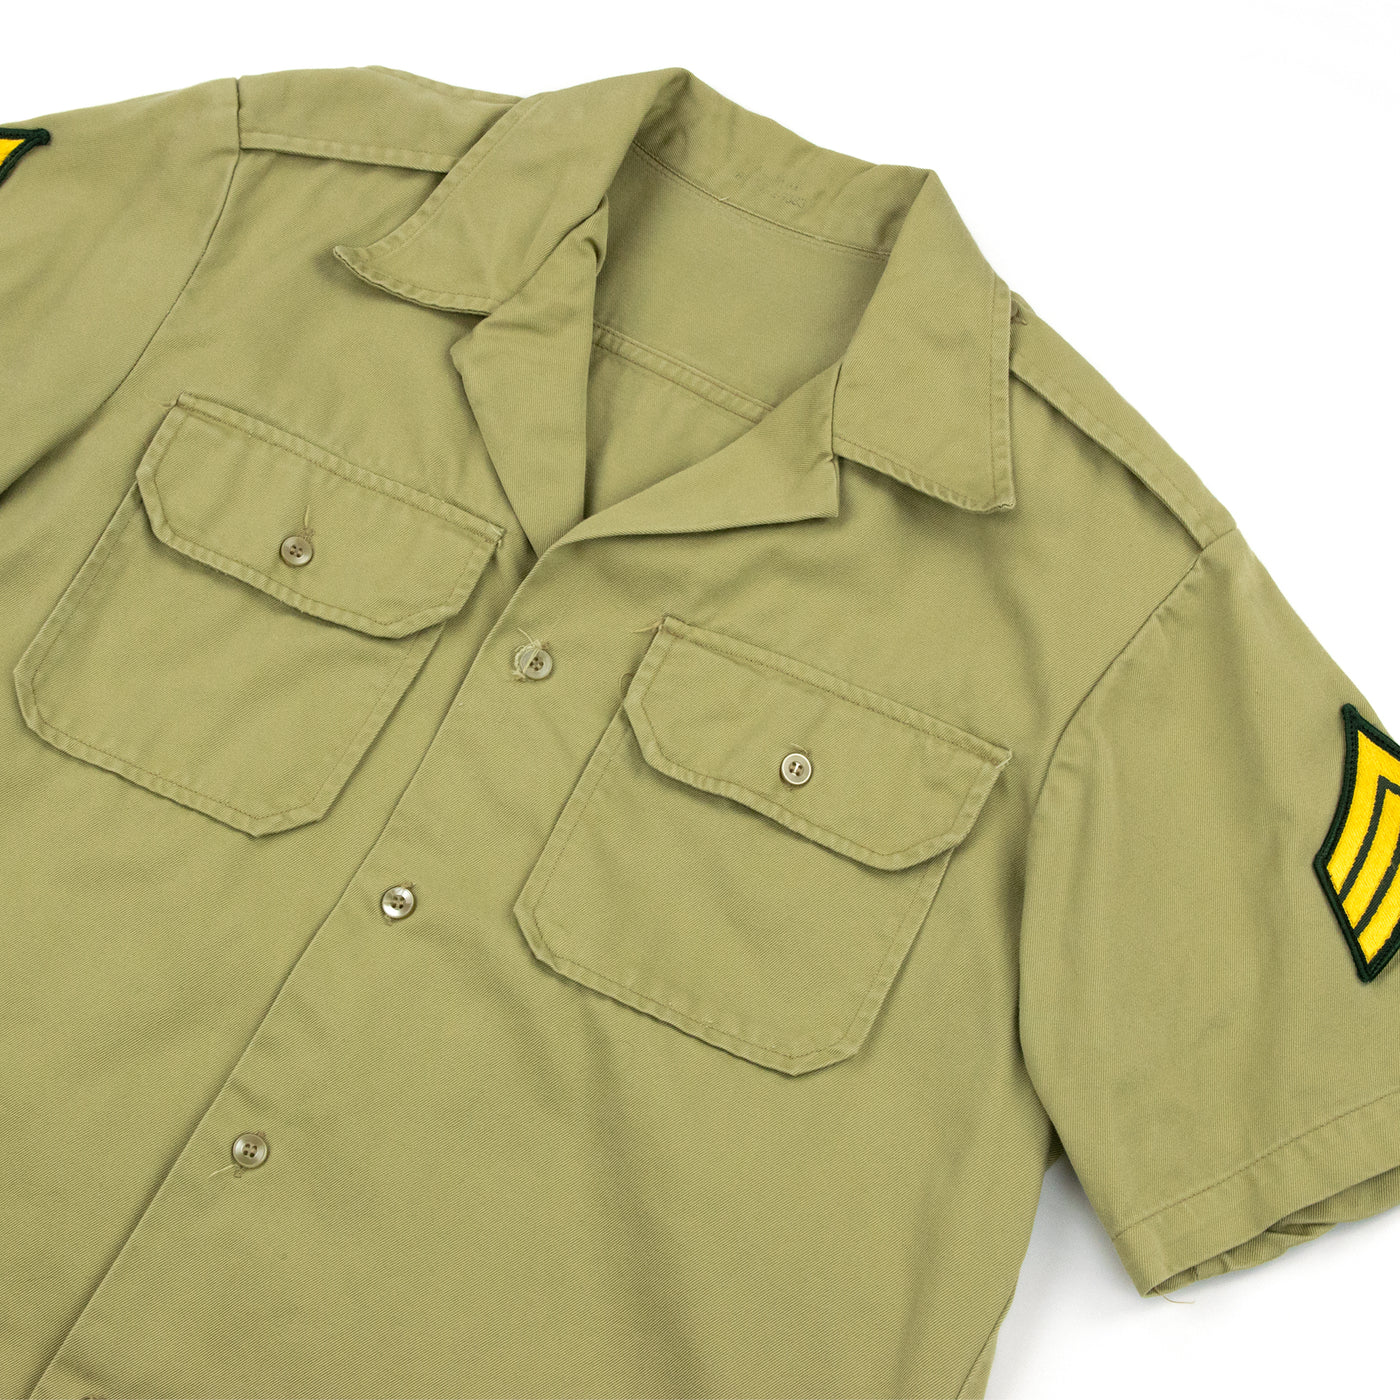 Vintage 70s Vietnam Era US Army Khaki Cotton Twill Military Summer Shirt S/ M CHEST